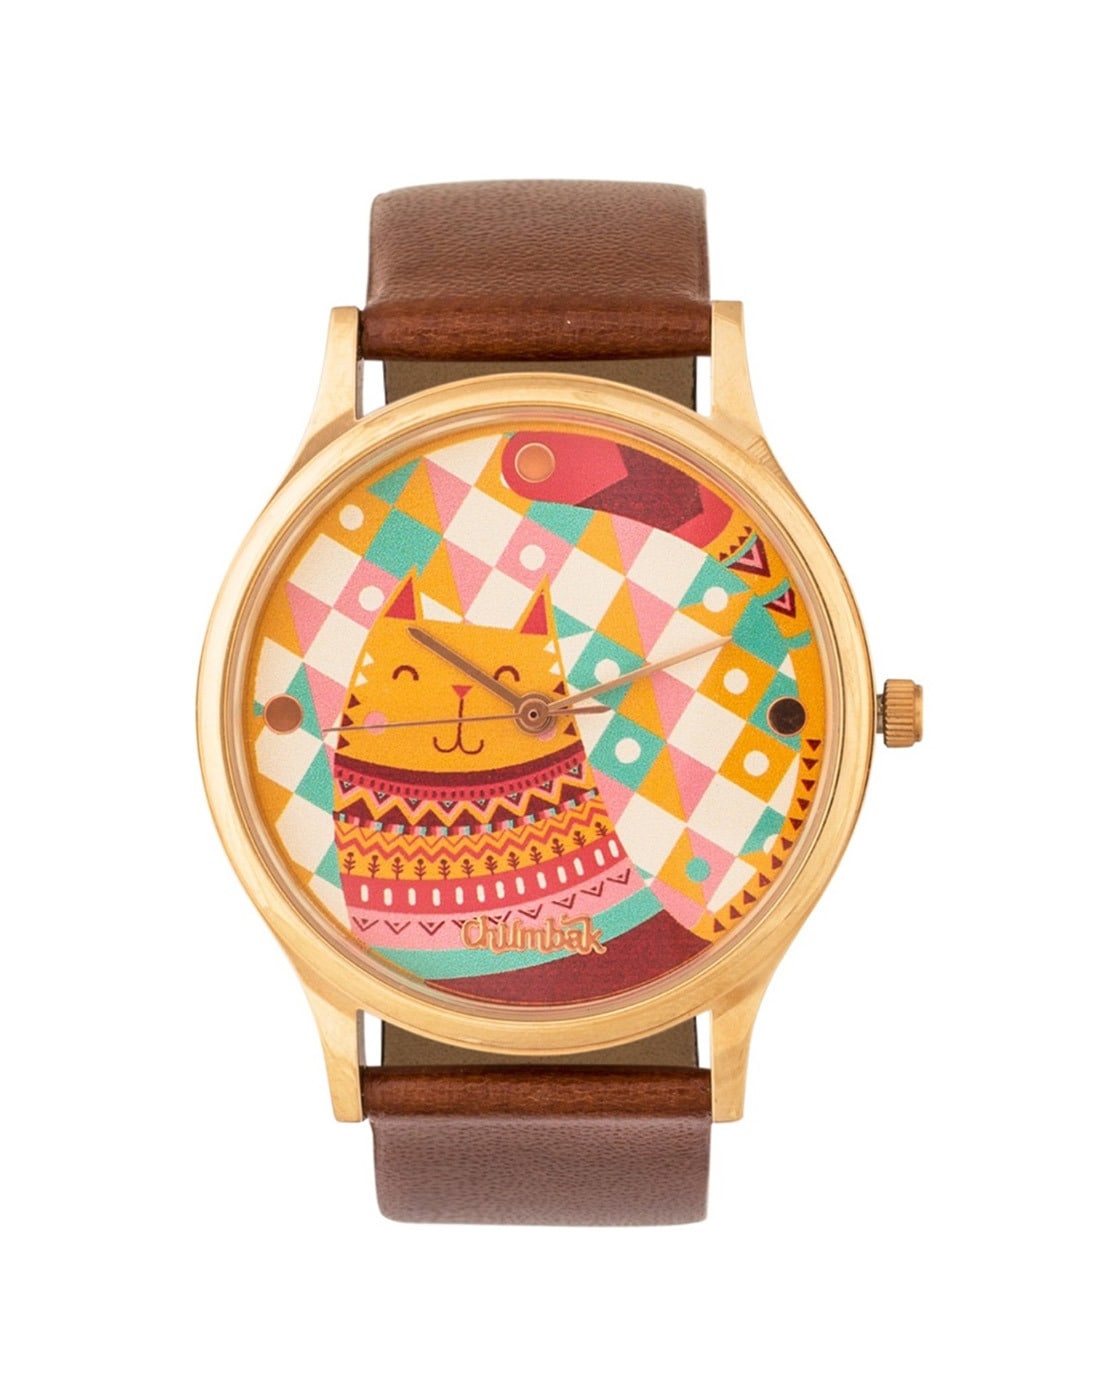 Chumbak Live Slow Watch & Bracelet Set - Peach & Rose Gold - Jewelry Watch,  Wrist Watch for Women, Dress Watch, Fashion Accessory with Bracelet Set, S  - Price History